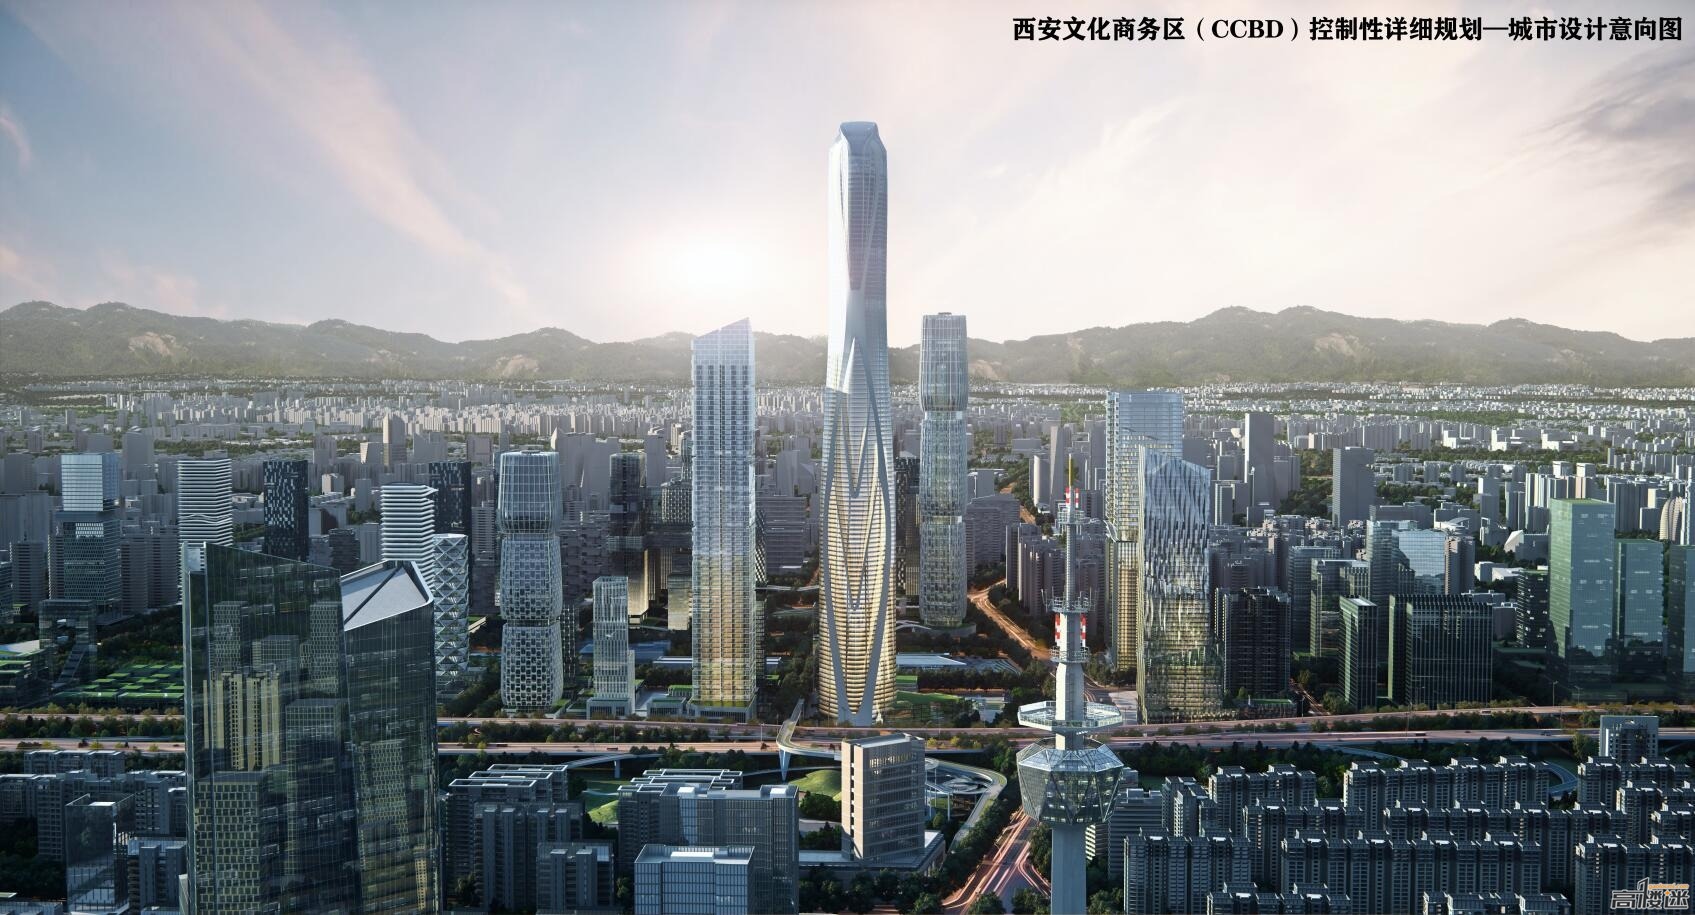 XI'AN | Xi'an Central Cultural Business District | 480m | 1575ft 